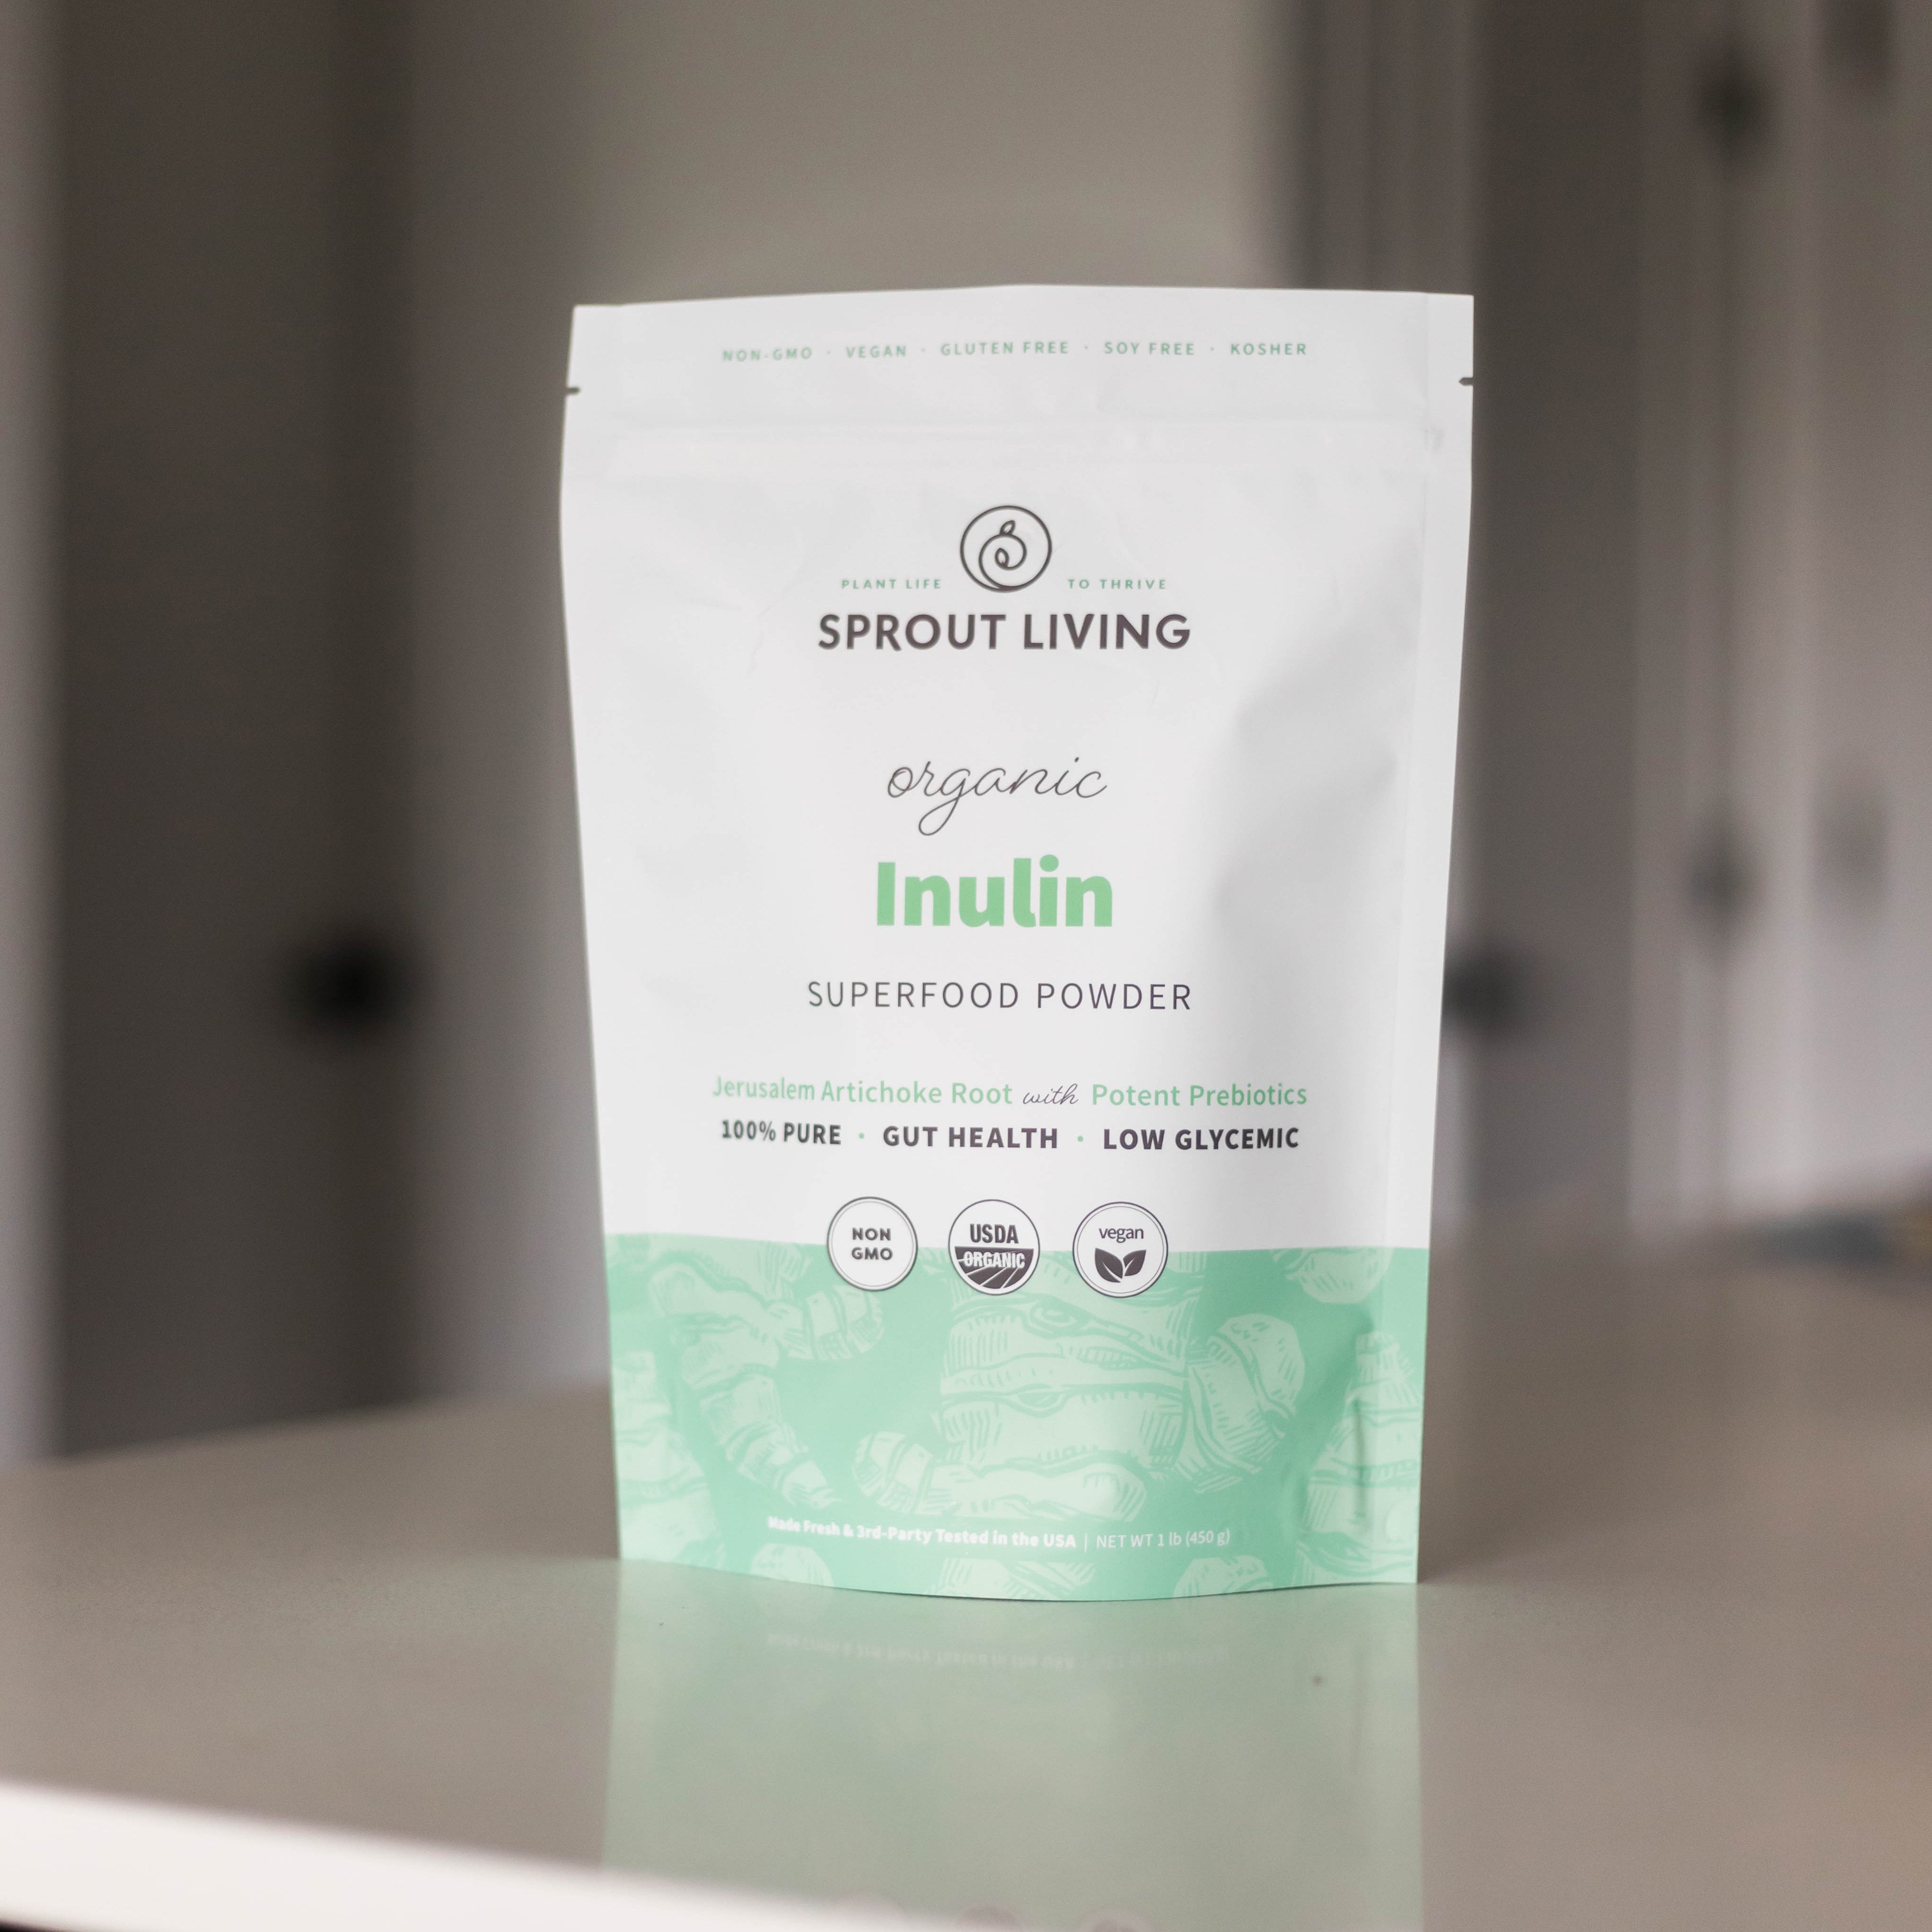 Bag of Inulin Superfood Powder